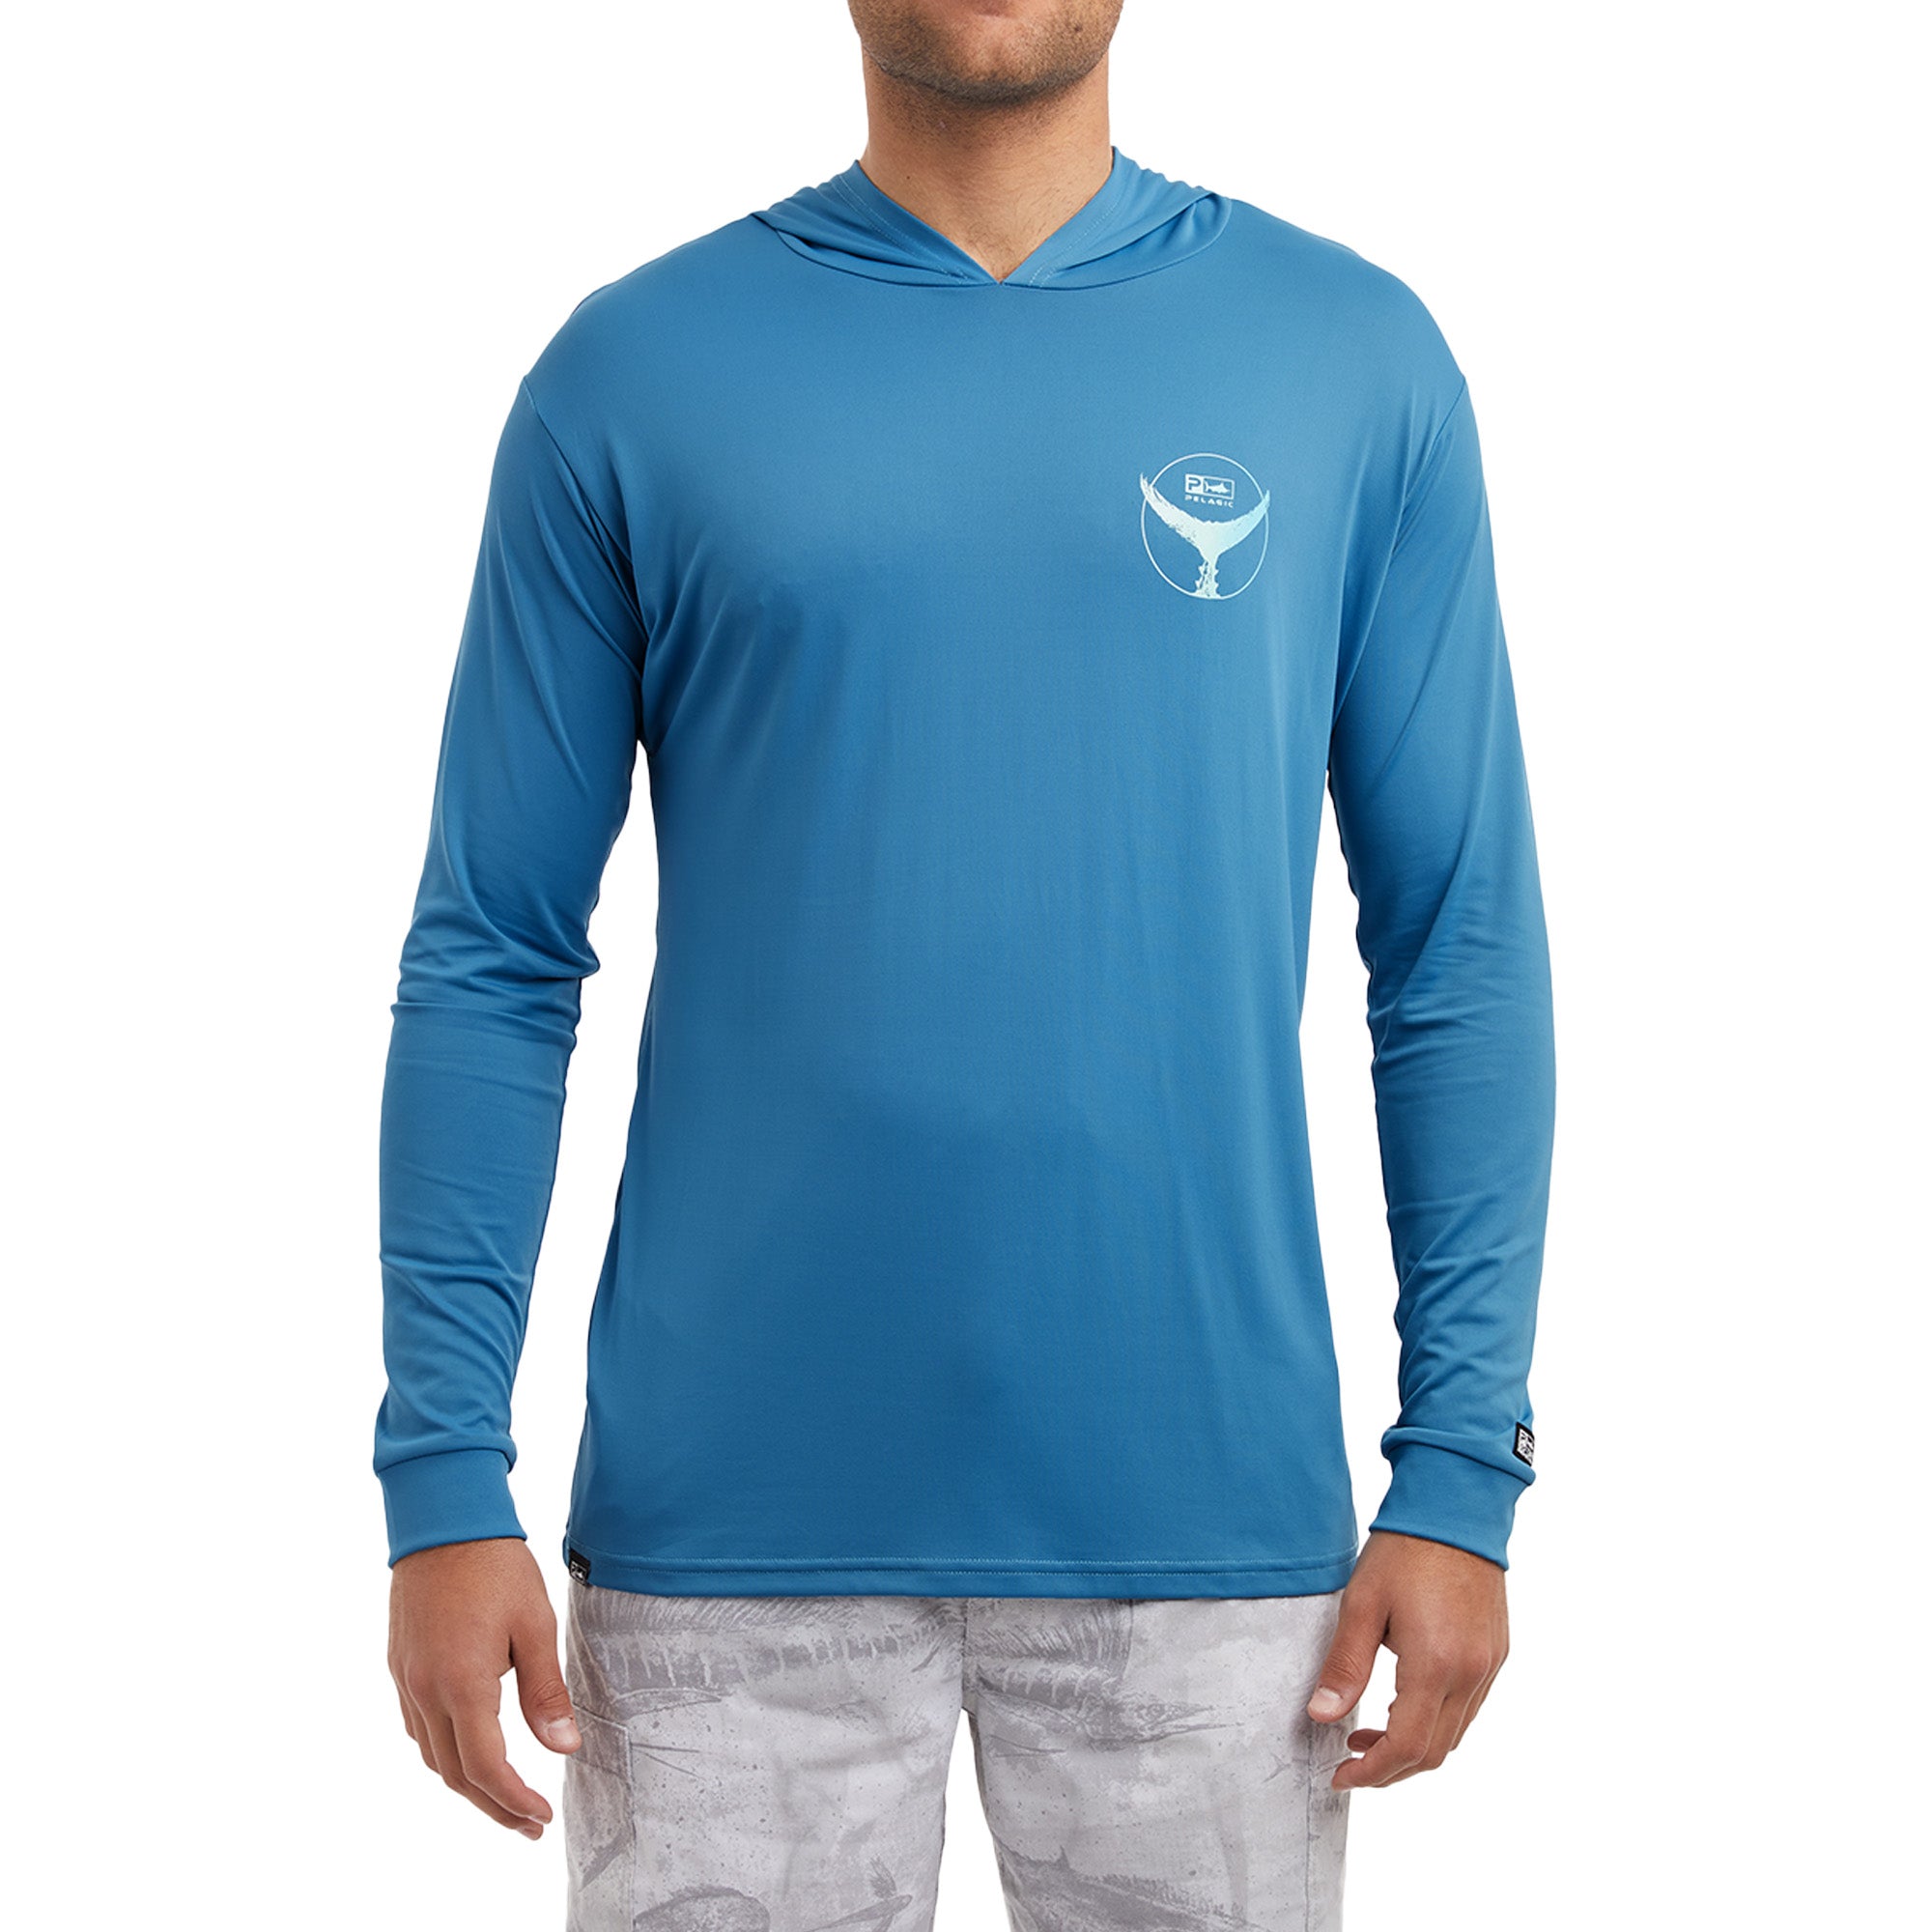 Youth Tails Up UV Fishing Shirt (8-20)